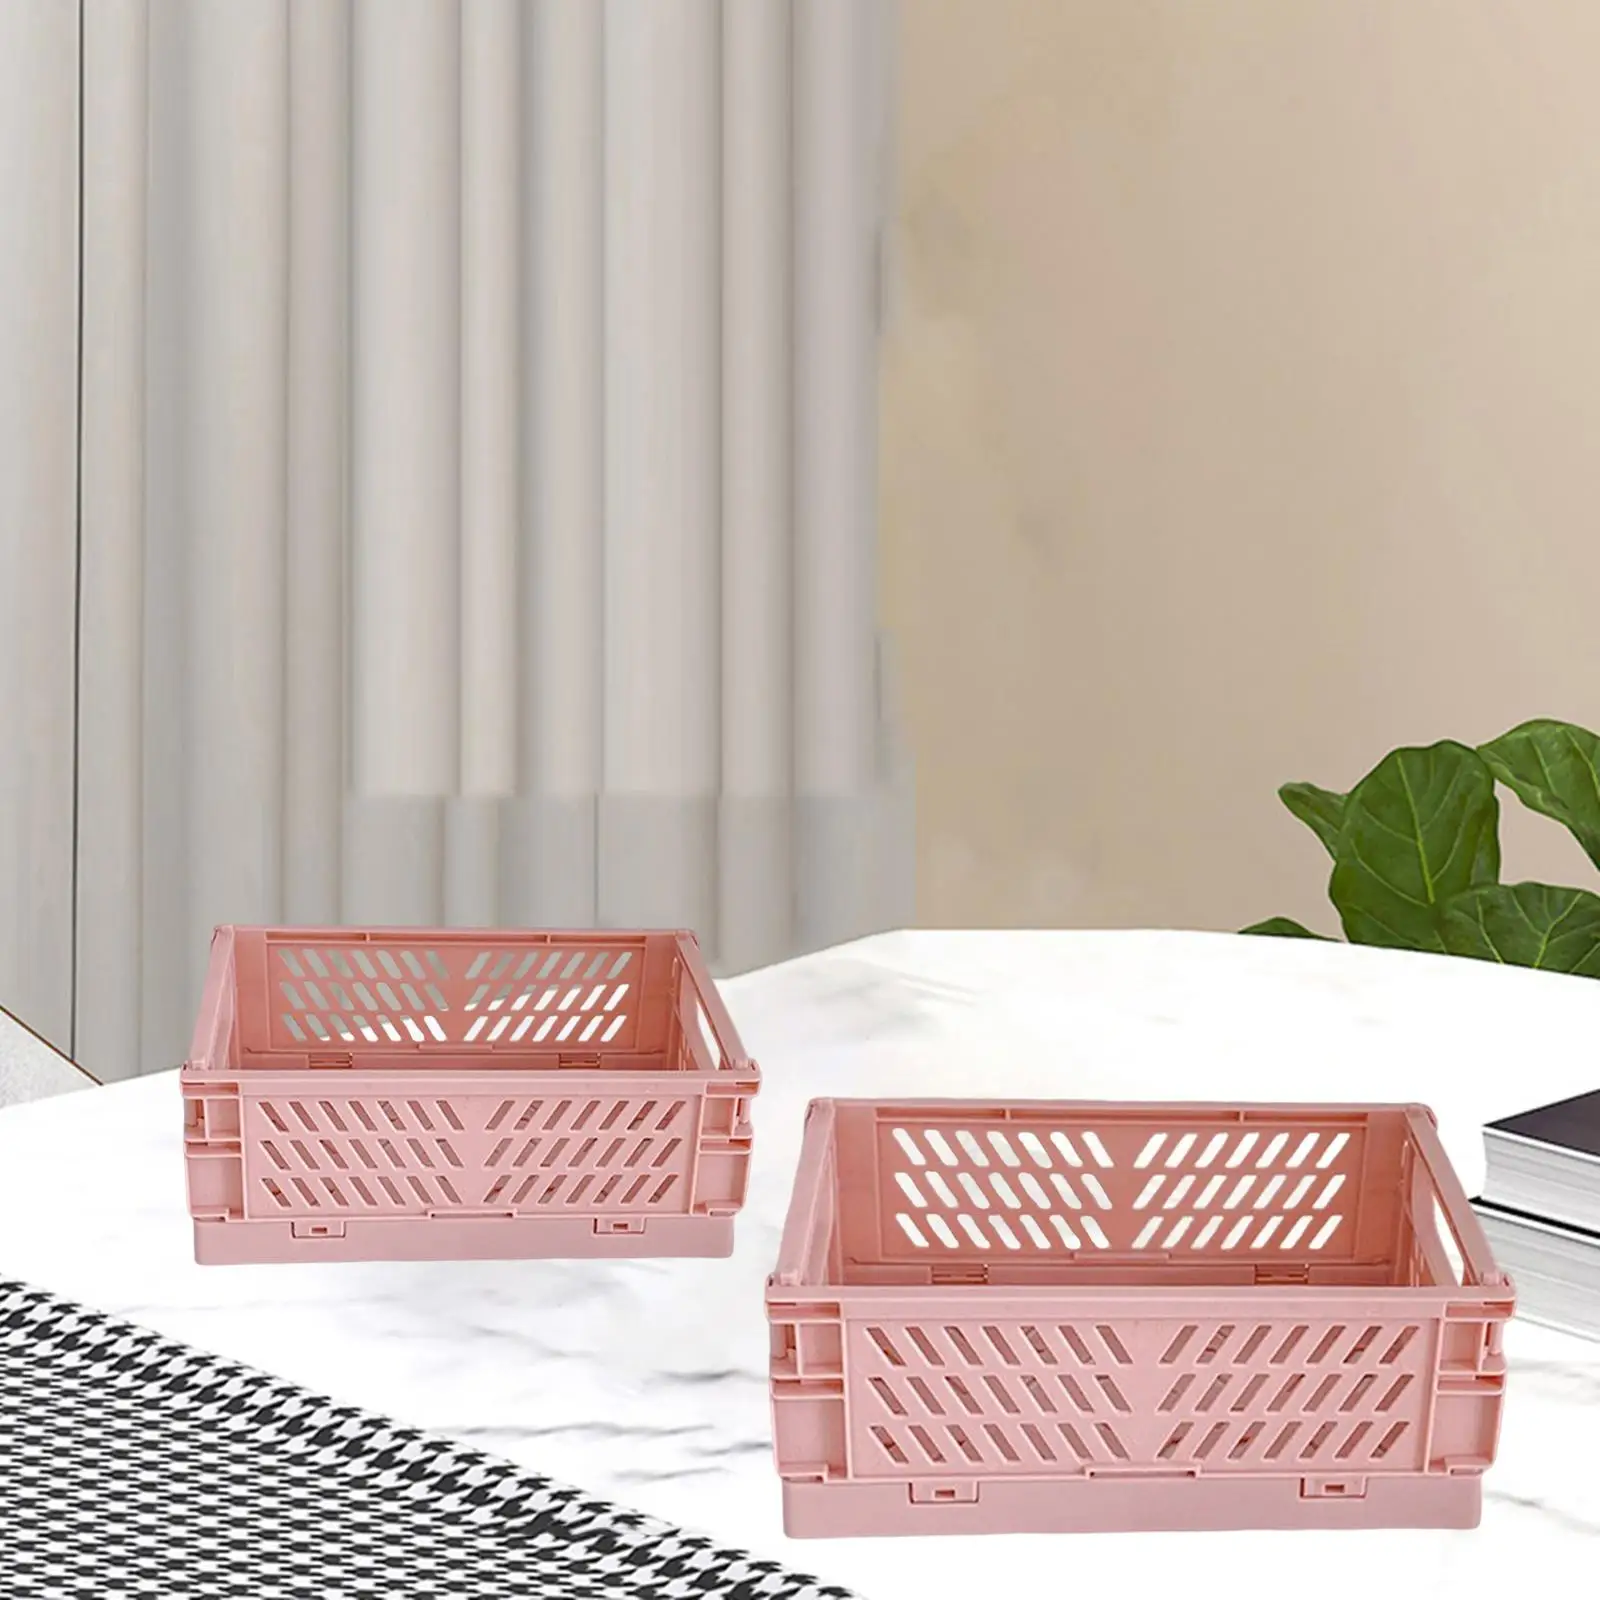 2x Foldable Storage Box Storage Crate Collapsible Storage Bin for Bathroom Home Kitchen